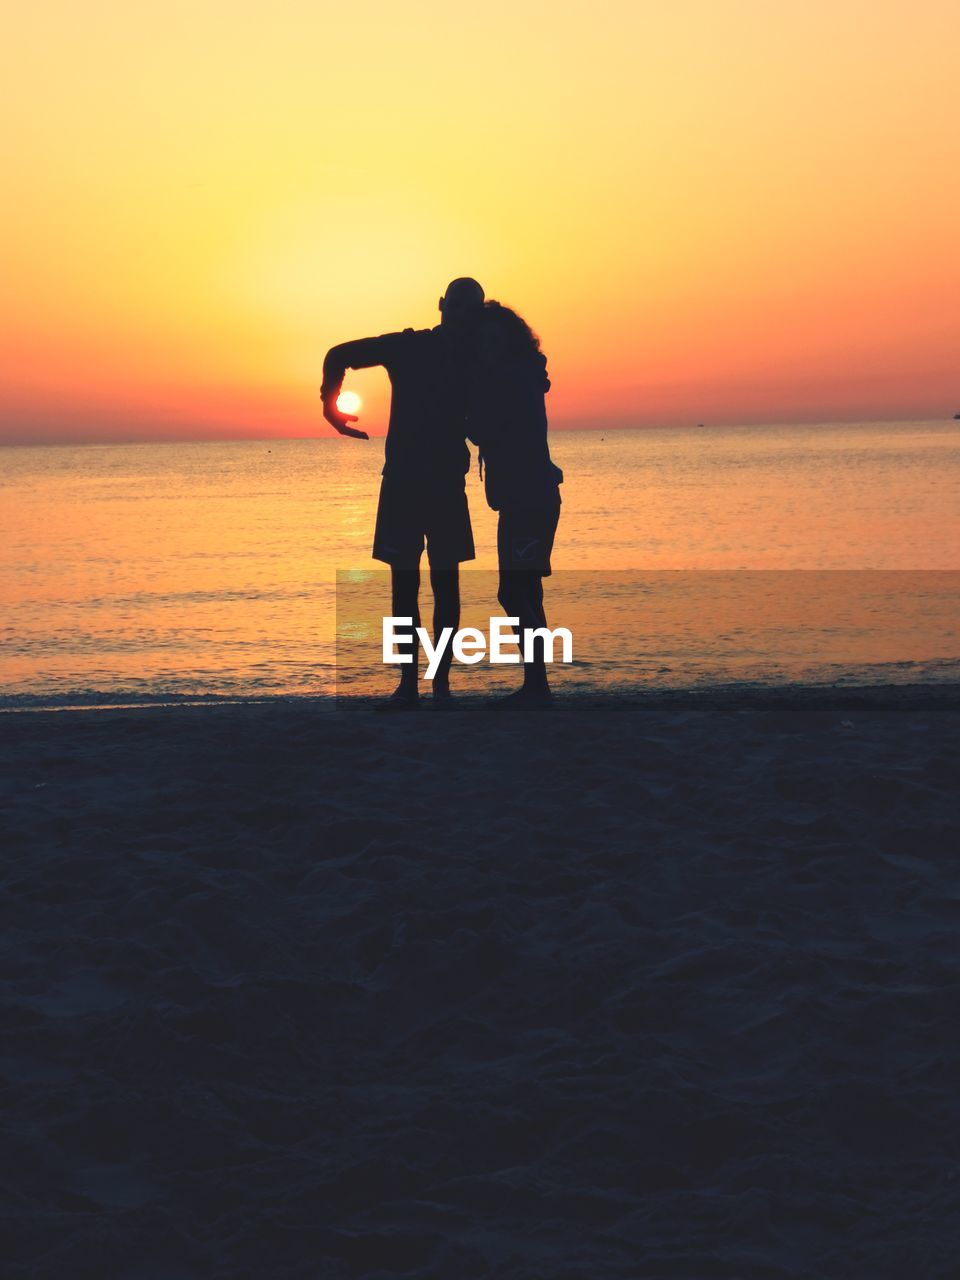 Silhouette boyfriend standing on beach during sunset